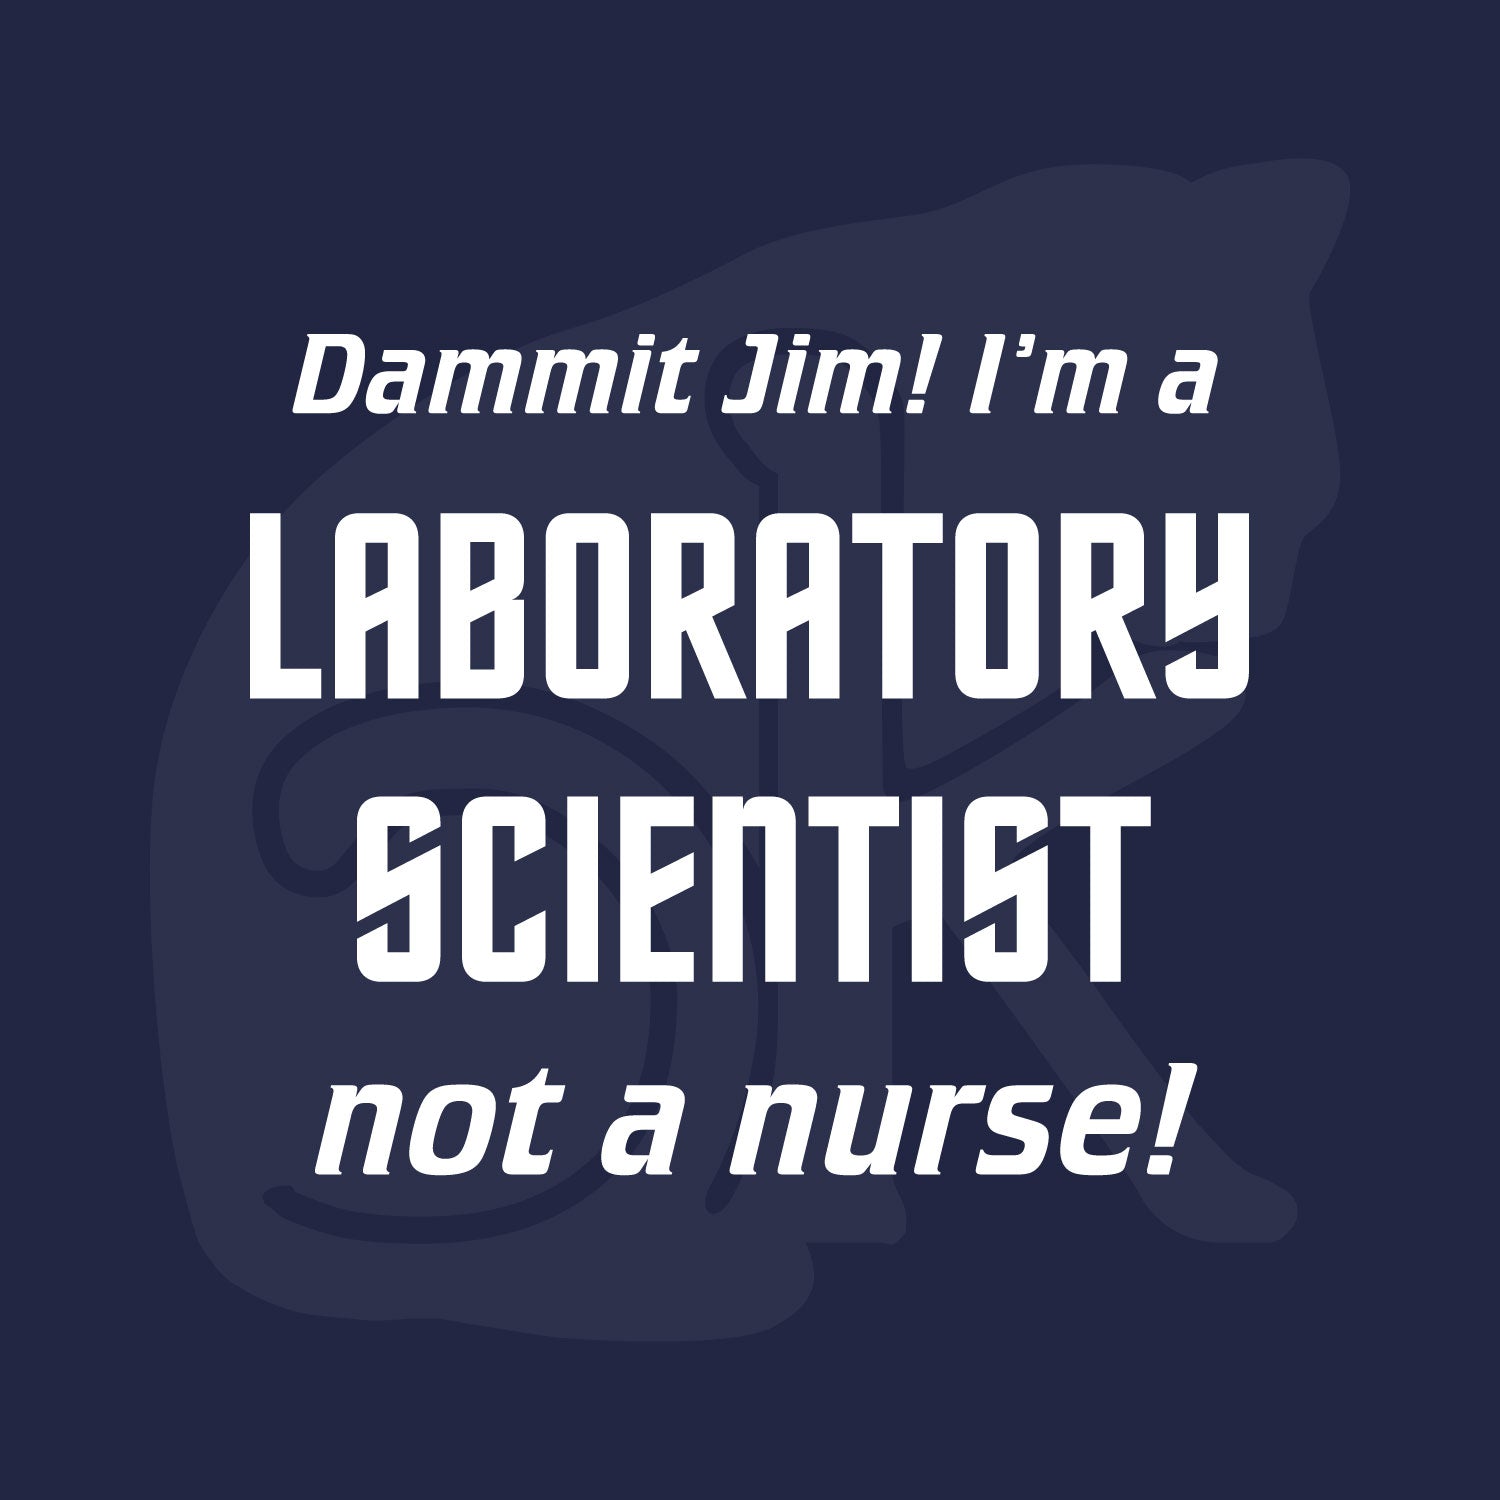 Standalone watermarked graphic in Star Trek font: "Dammit Jim! I'm a LABORATORY SCIENTIST not a nurse!"